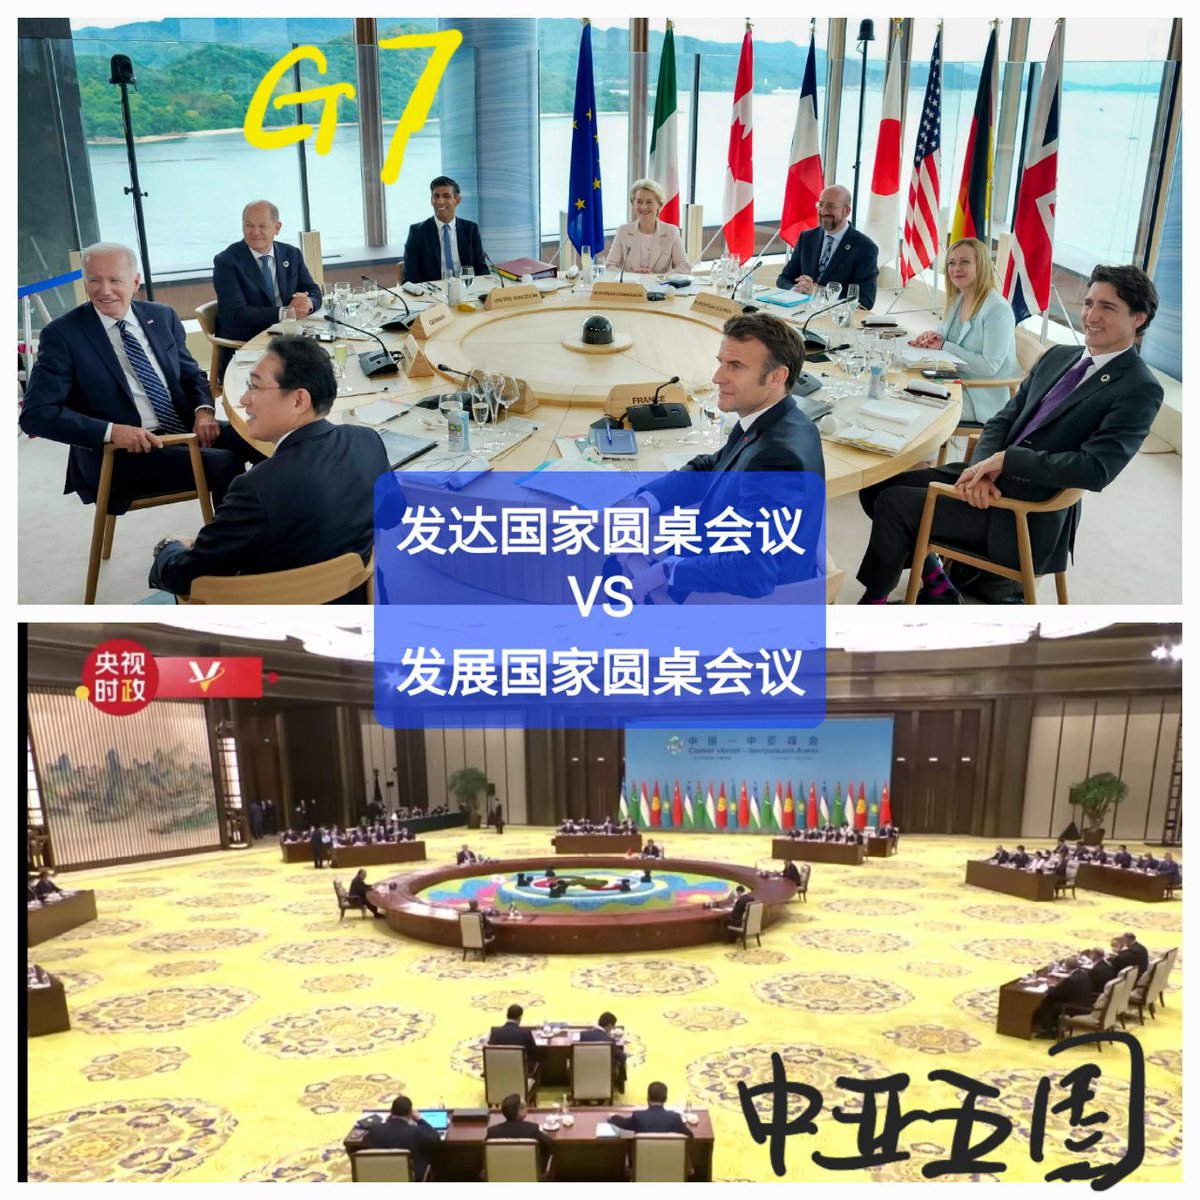 #G7Summit vs #ChinaCentralAsiaSummit 
#DevelopedCountry vs #DevelopingCountry